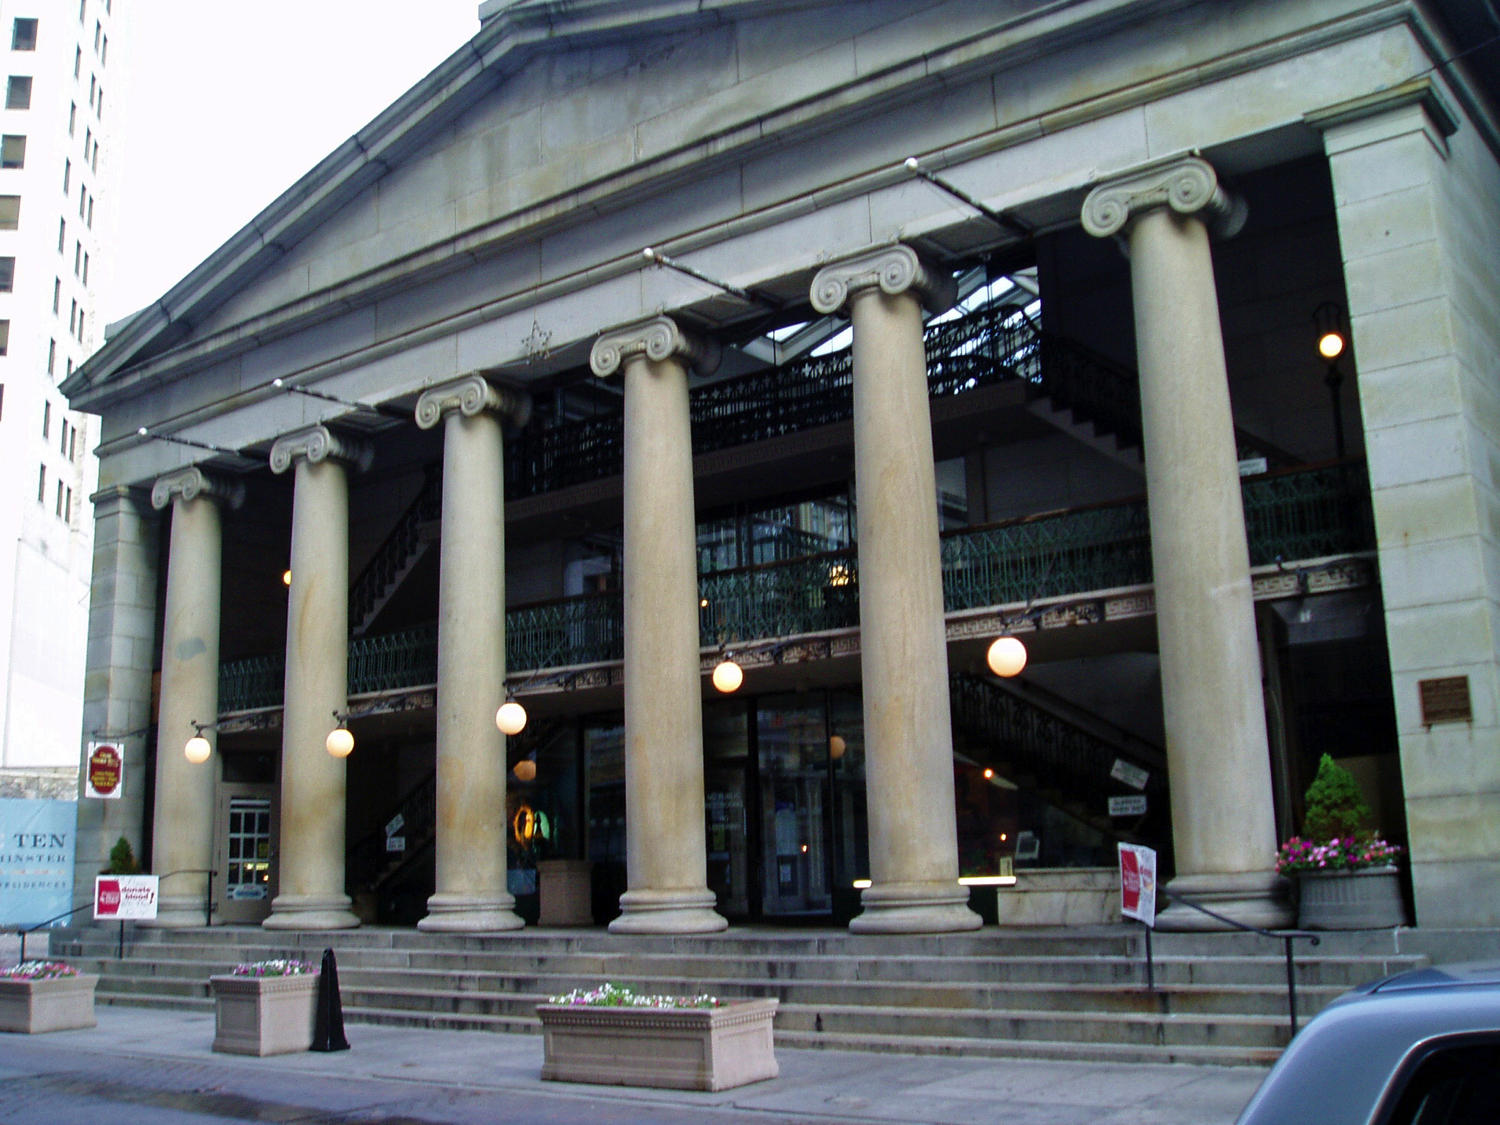 Westminster arcade by Loodog via Wikimedia Commons (CC BY-SA 3.0)